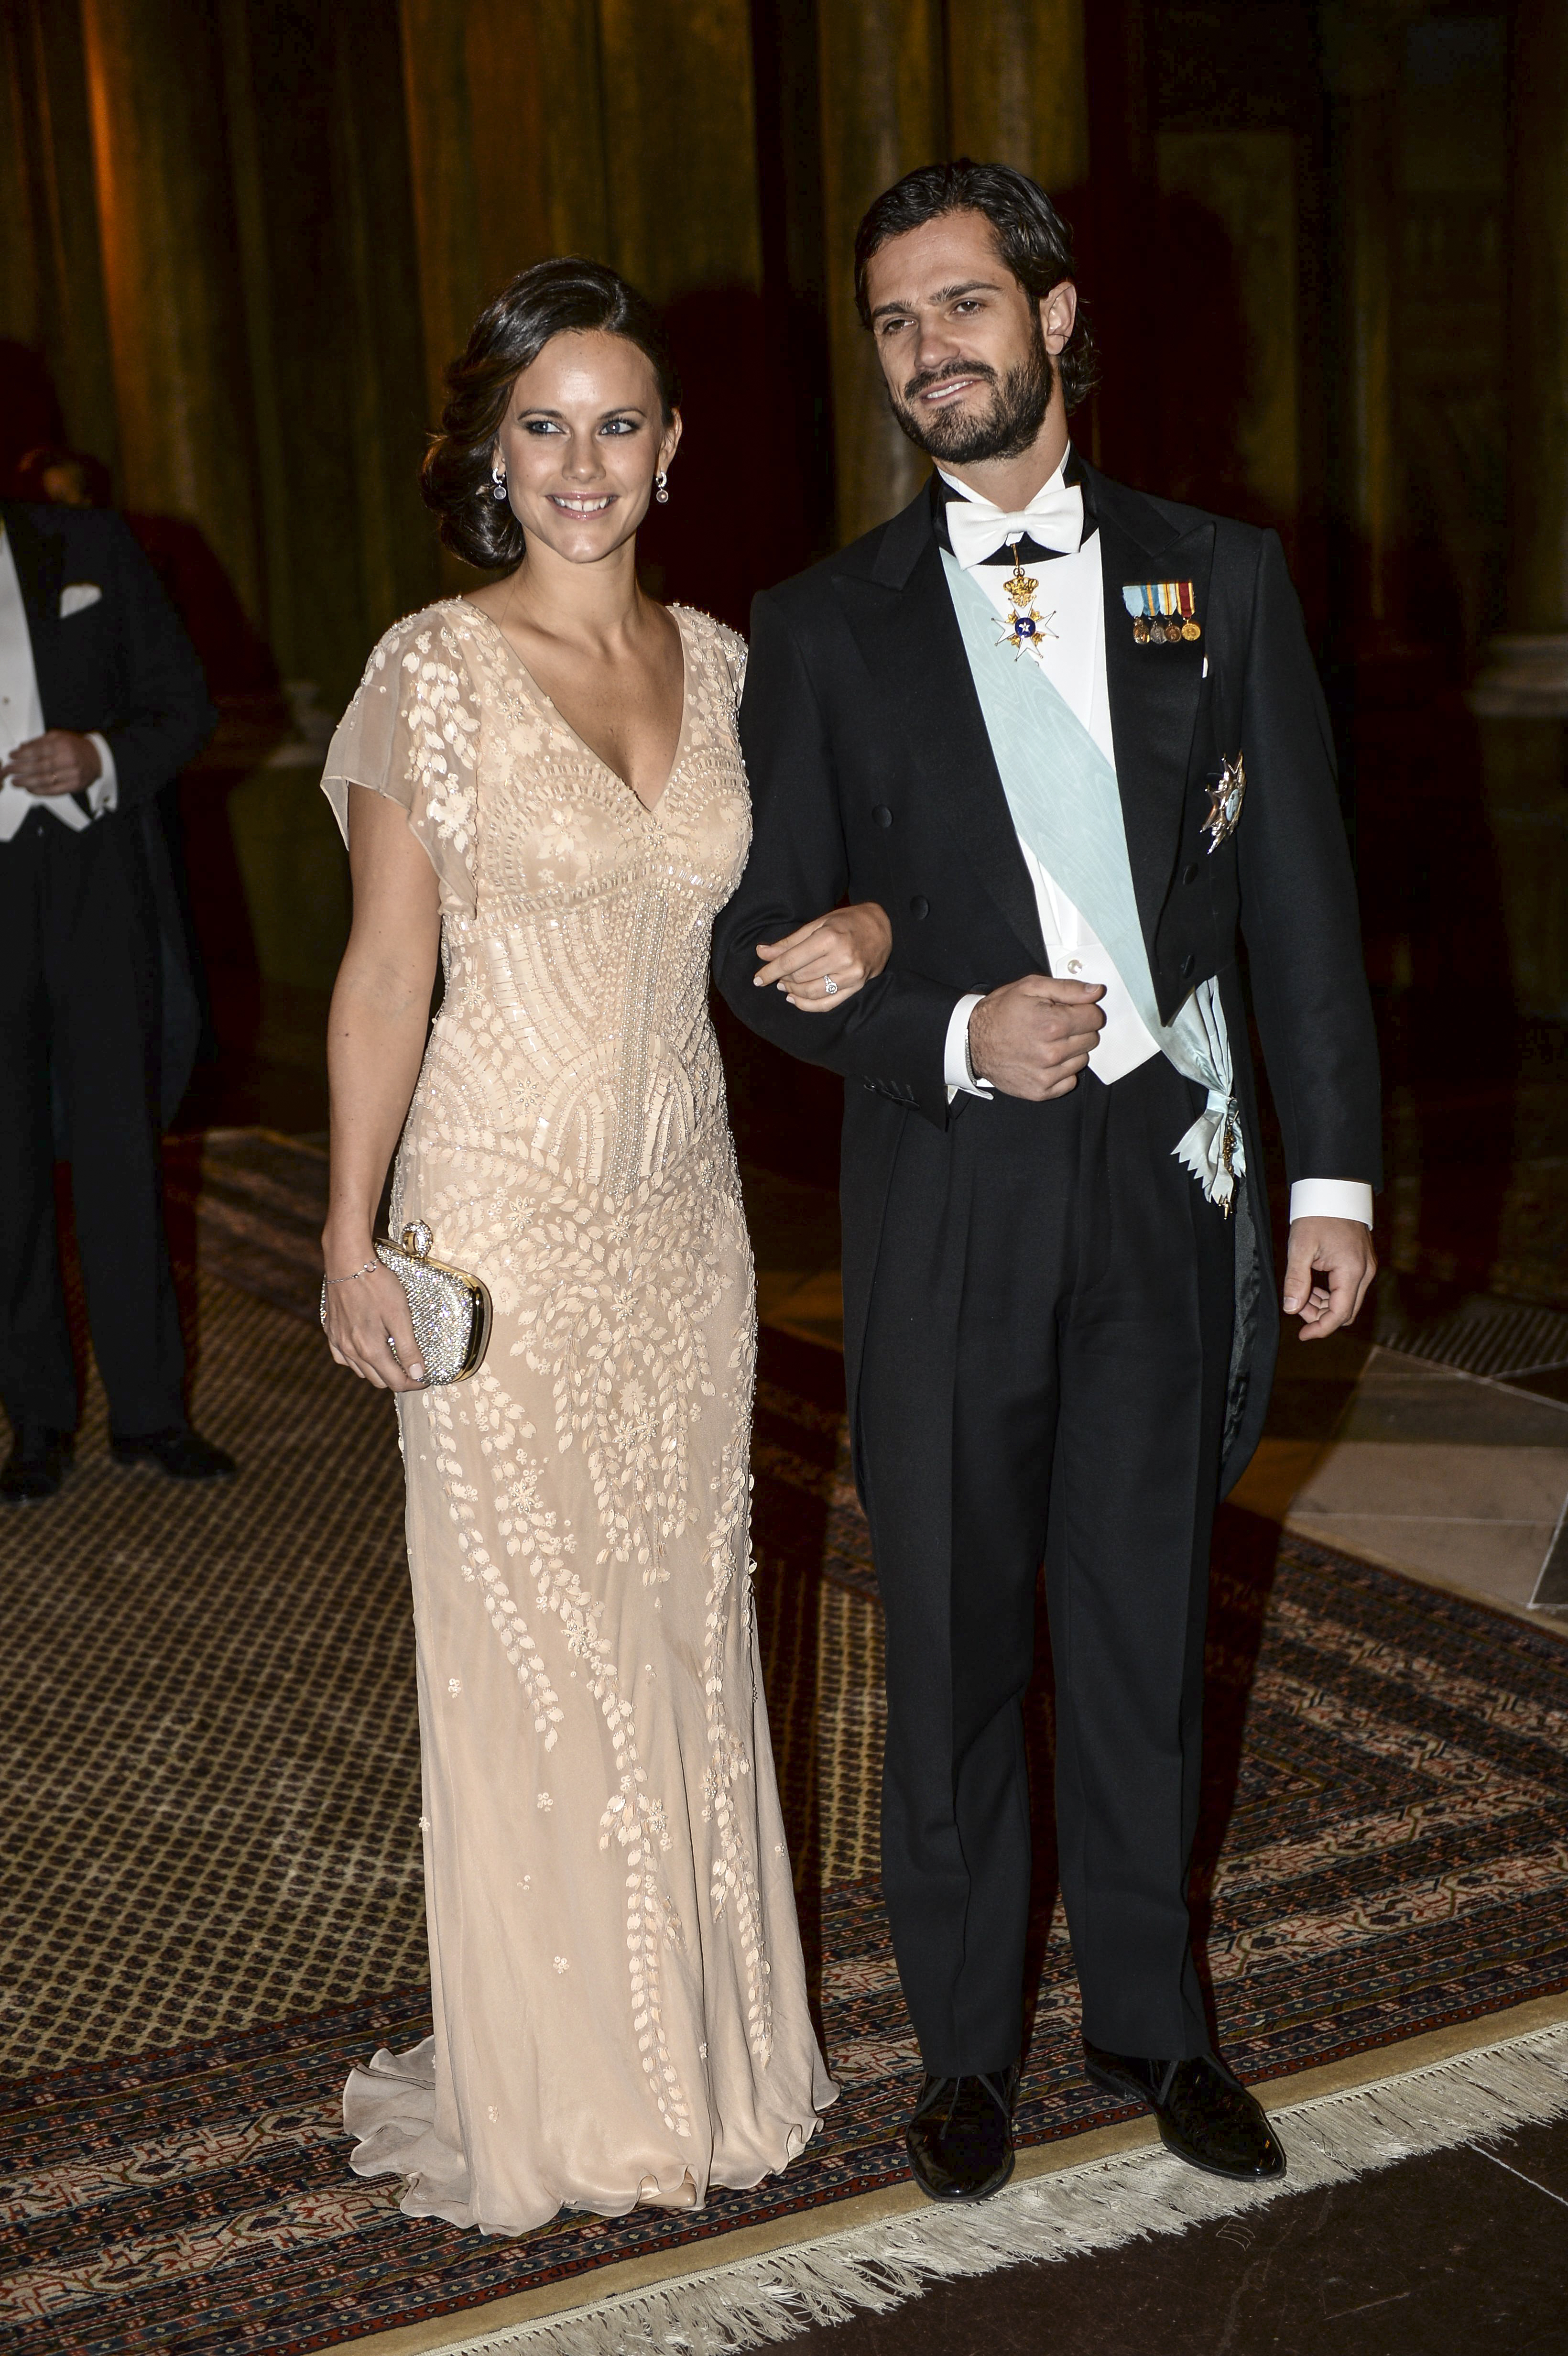 Kungliga bröllop, Bröllop, Kung Carl XVI Gustaf, Prins Carl Philip, Prinsessan Sofia, Facebook